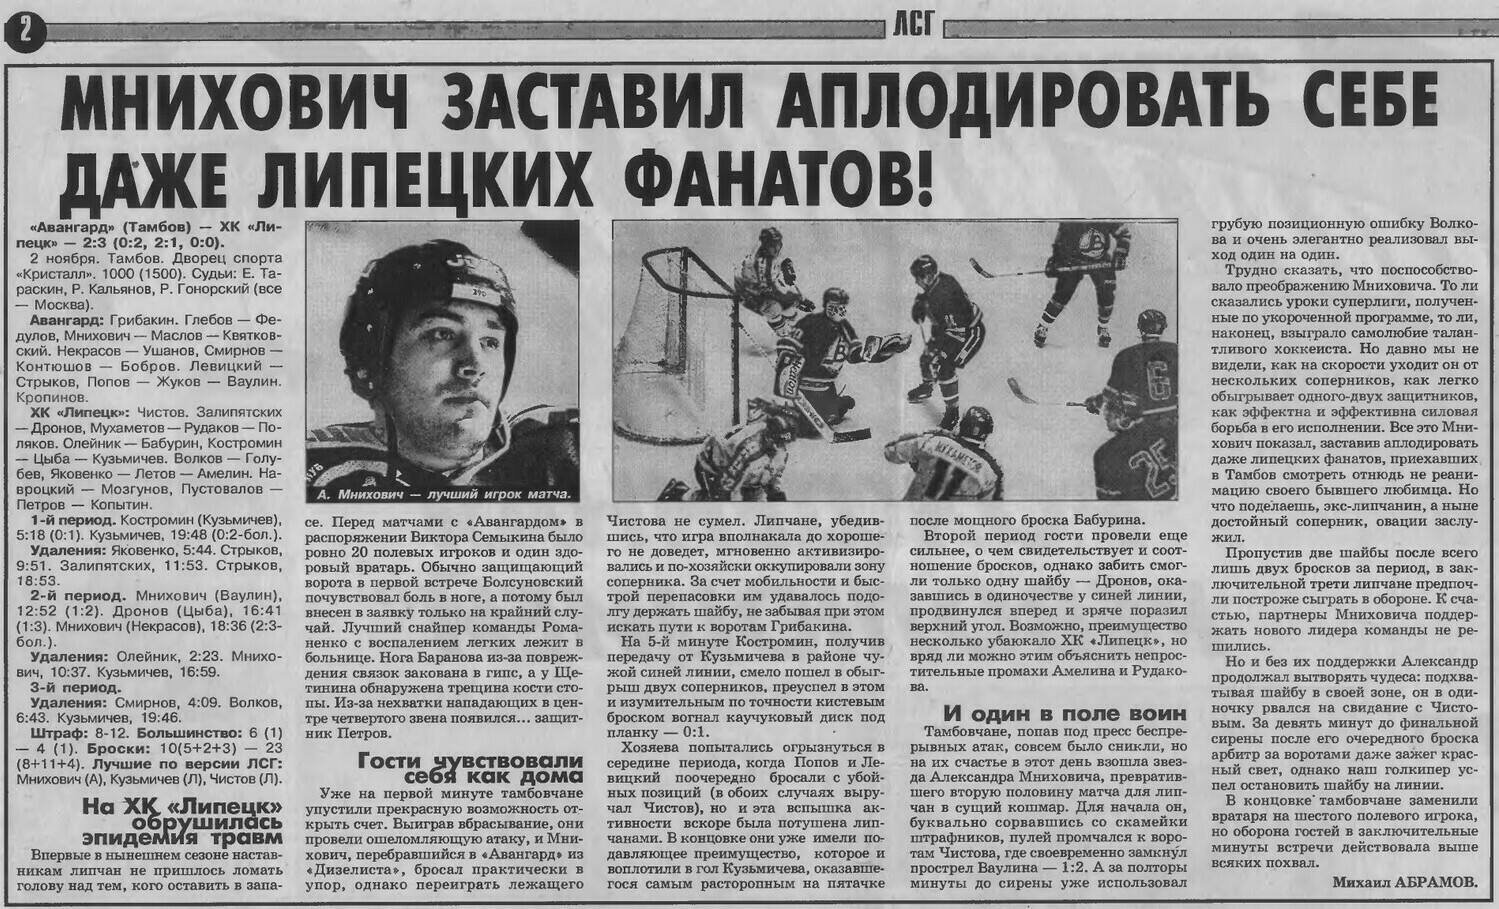 "Липецкая спортивная газета" №42 от 05.11.1997г. (с.2)